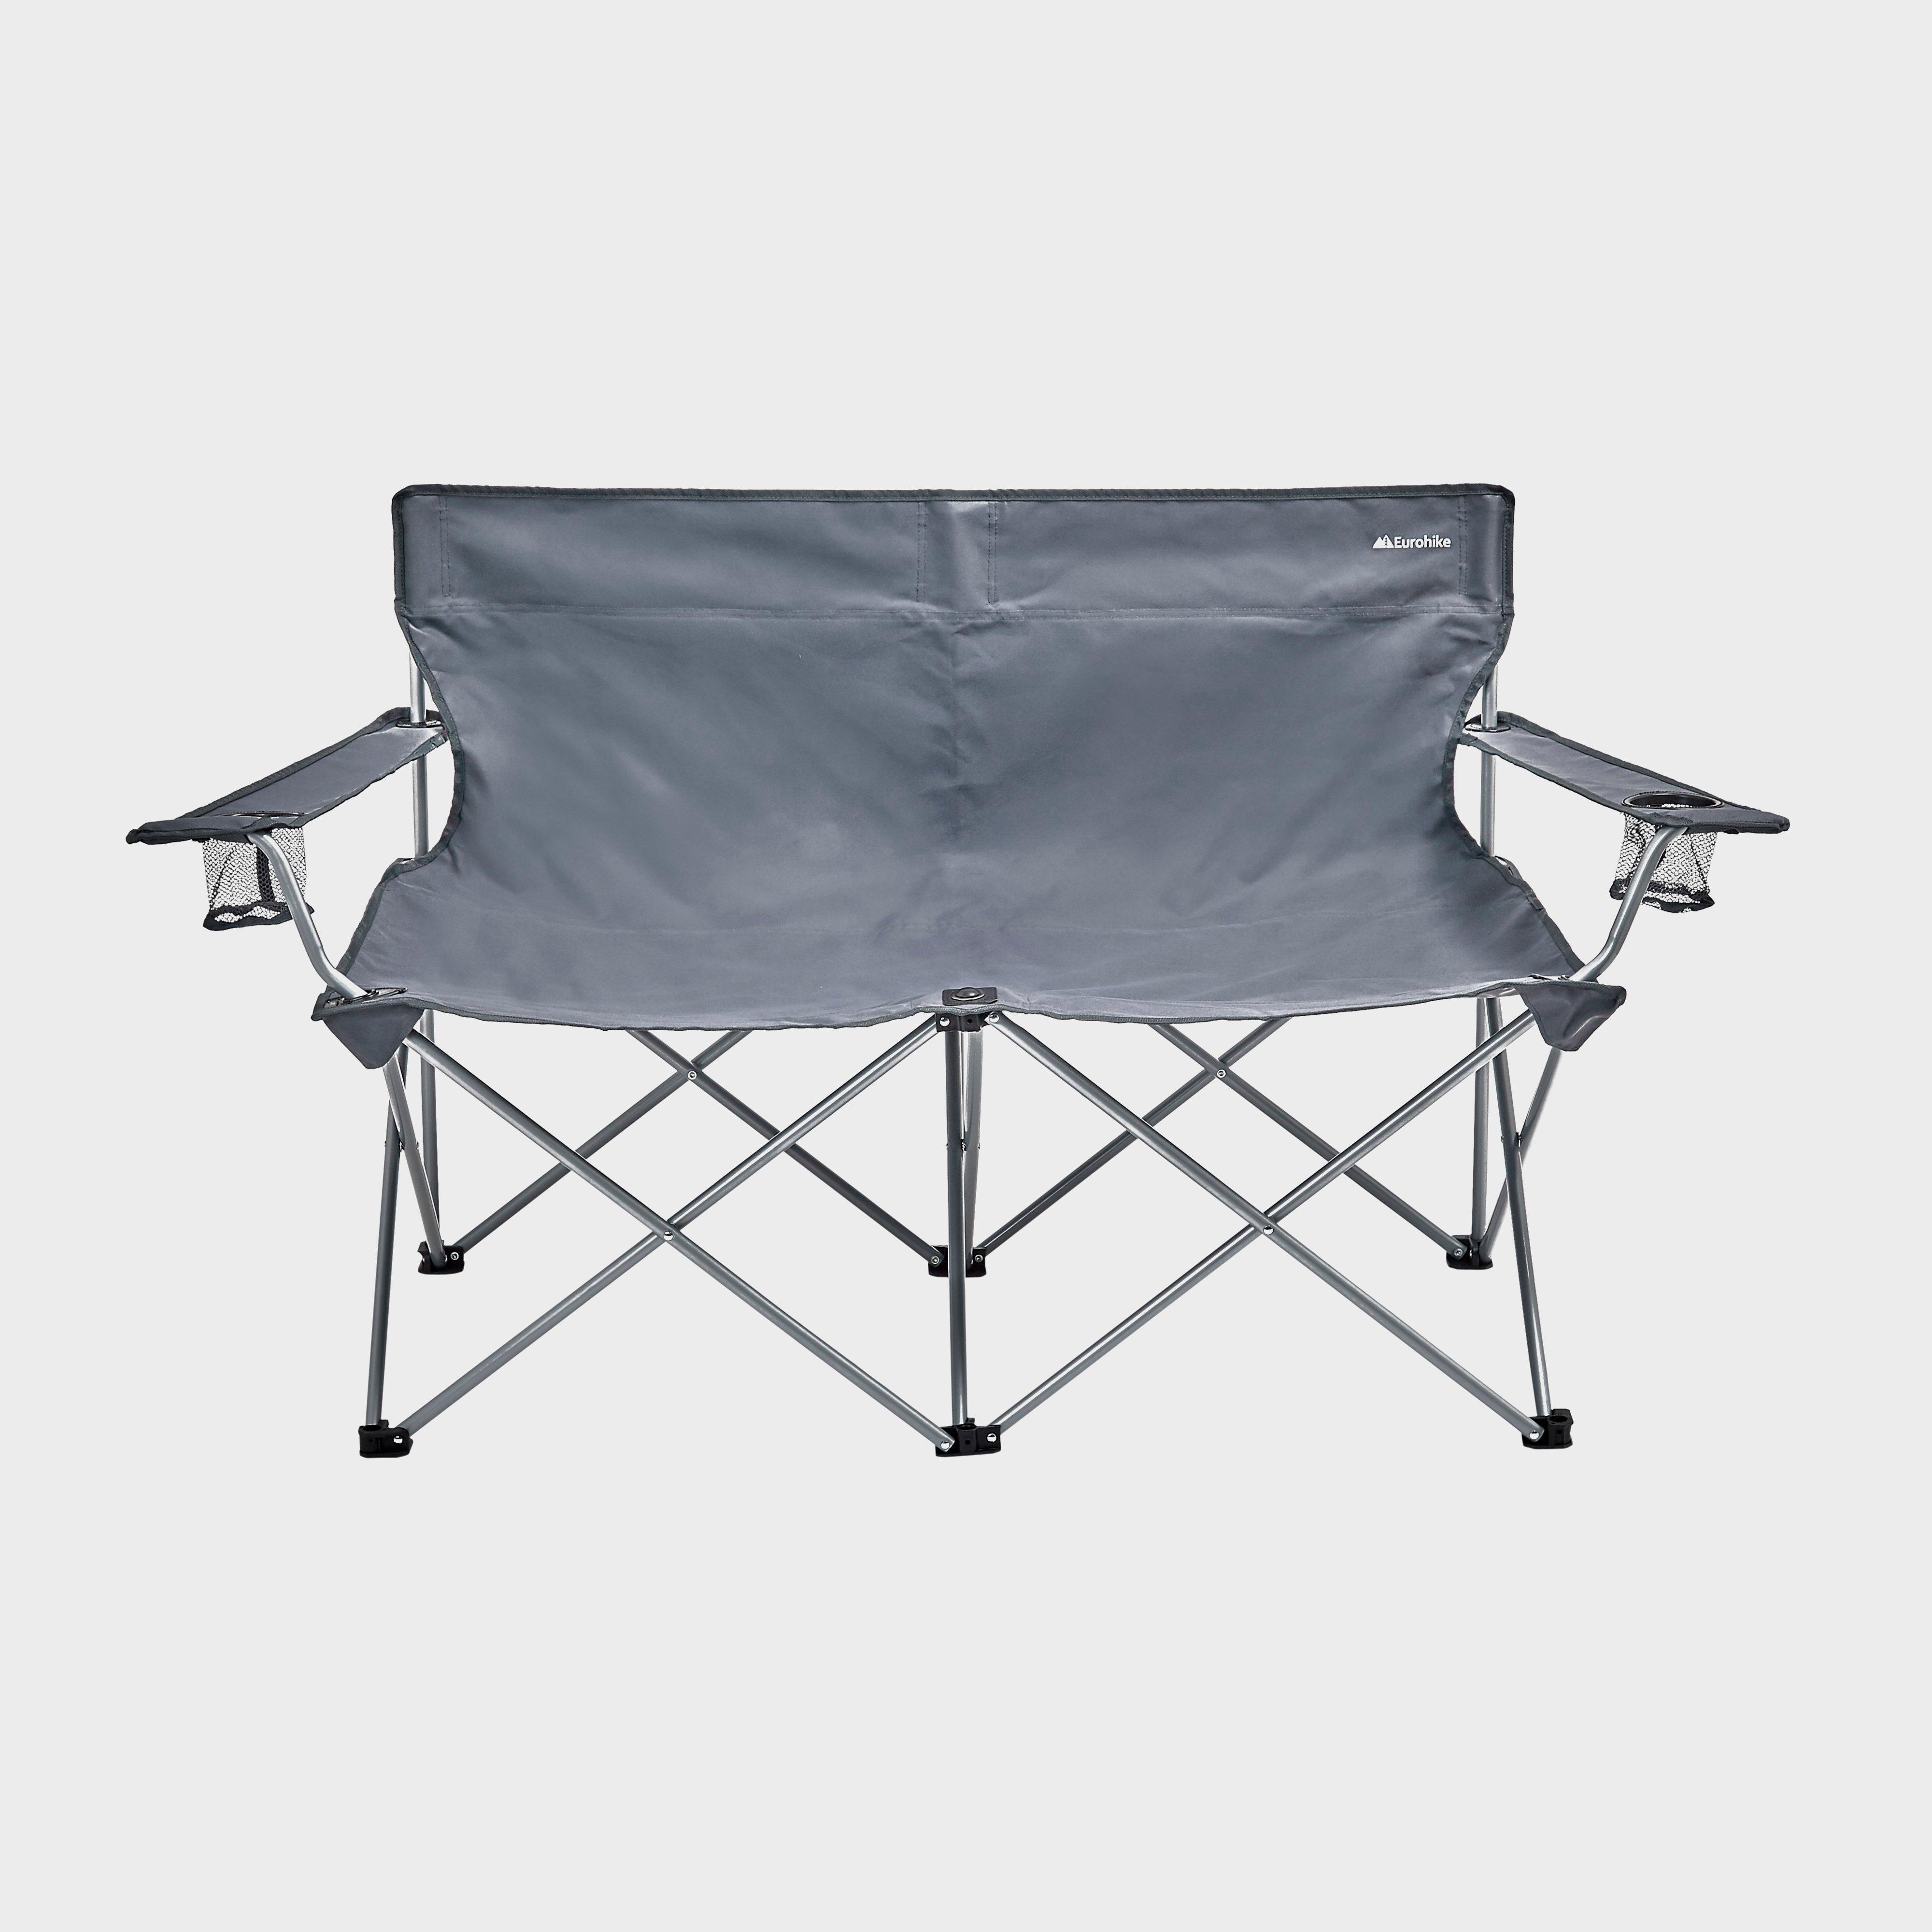 oex ultra lite camping chair